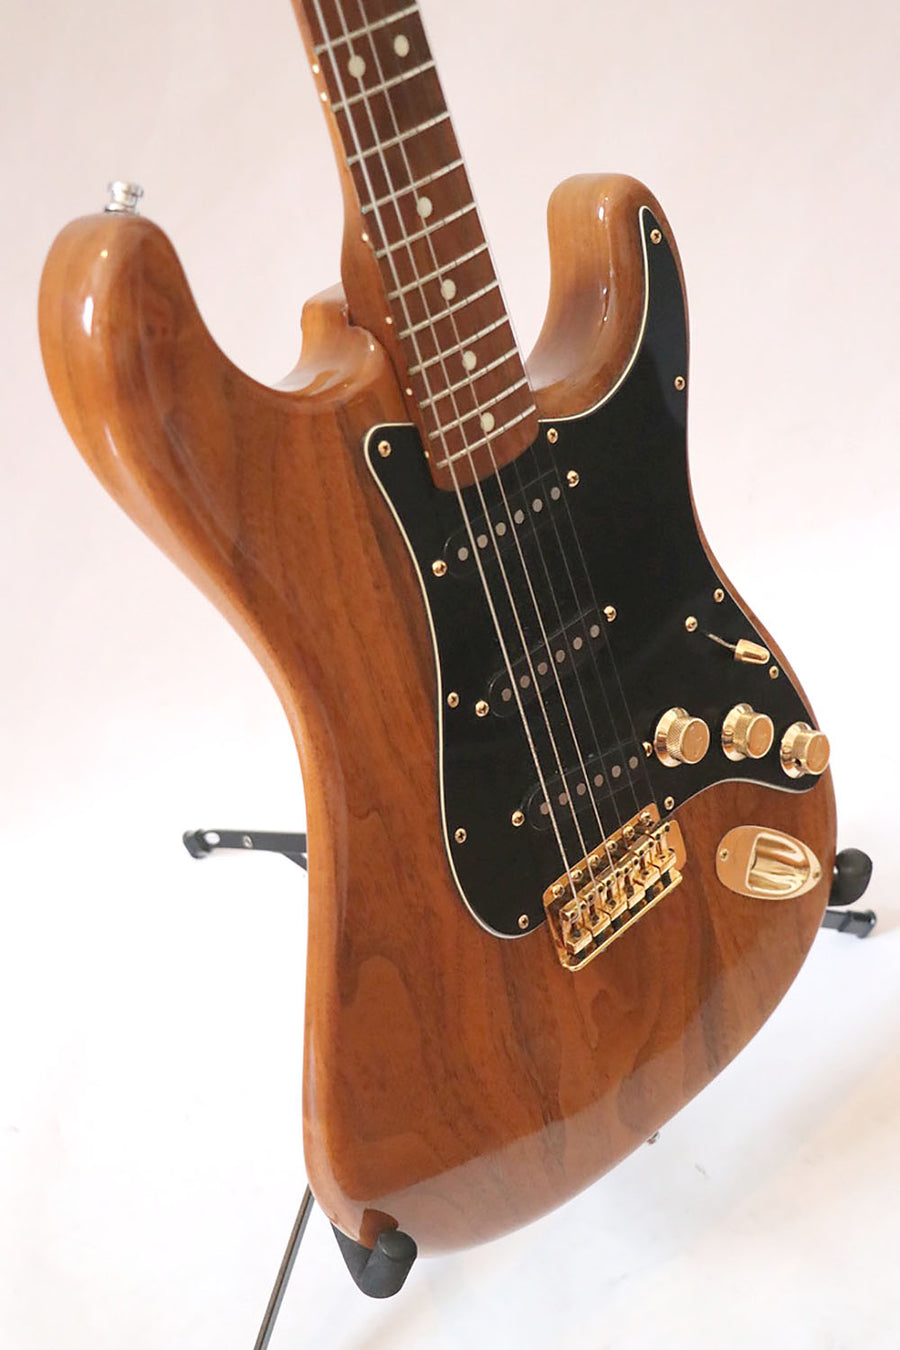 Fender Stratocaster Walnut 'The Strat' 1981